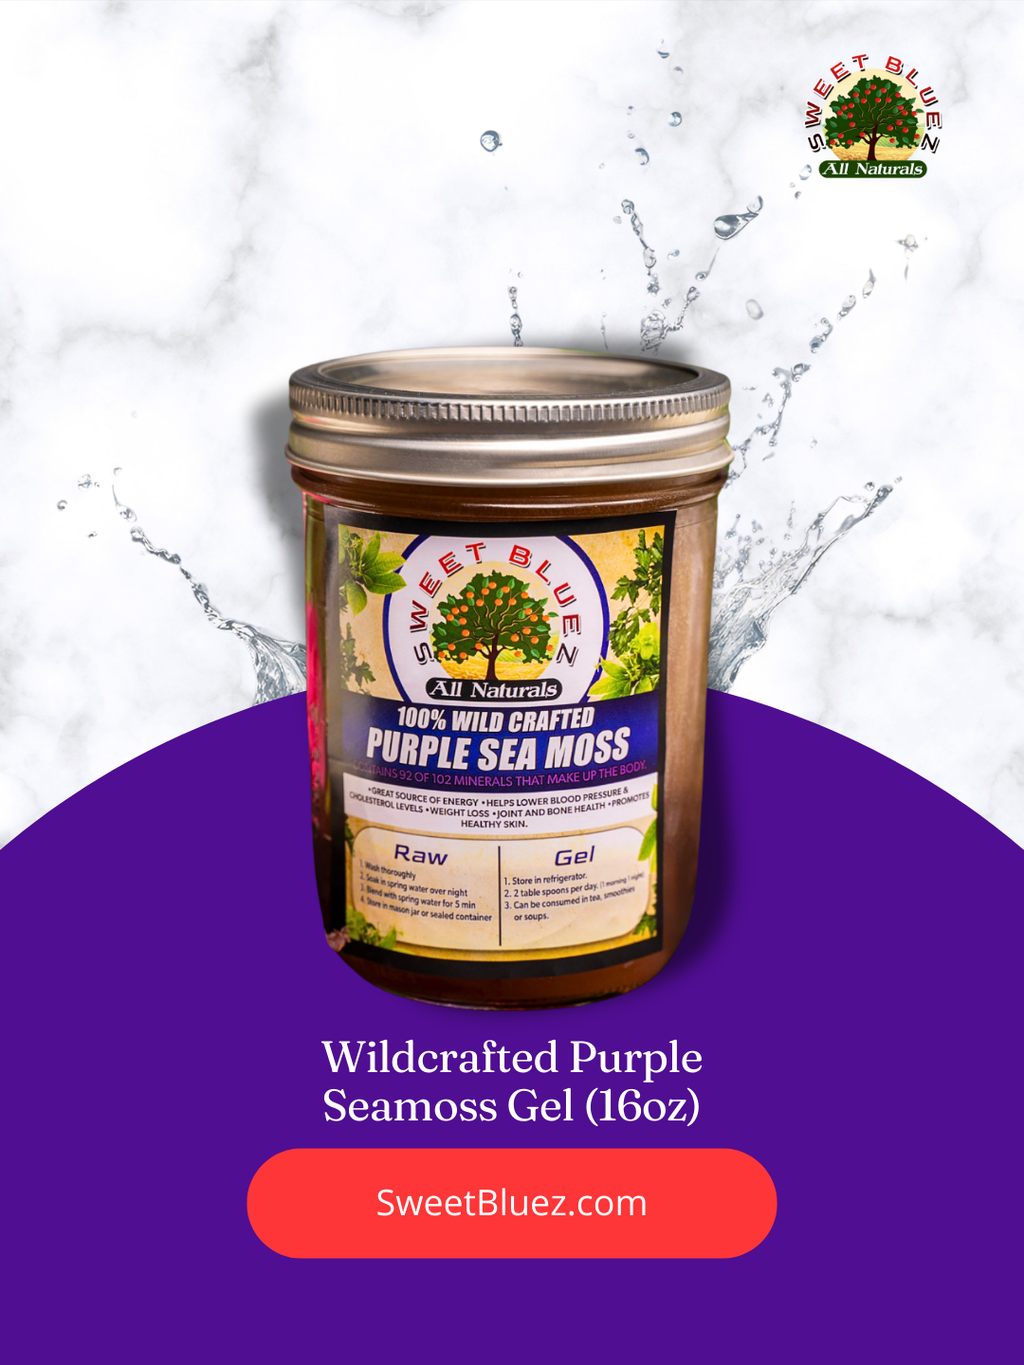 Seamoss gel, benefits of seamoss, wild crafted purple seamoss, chondrus crispus sea moss, thyroid, omega 3 fatty acids, anti-inflammatory, heart health